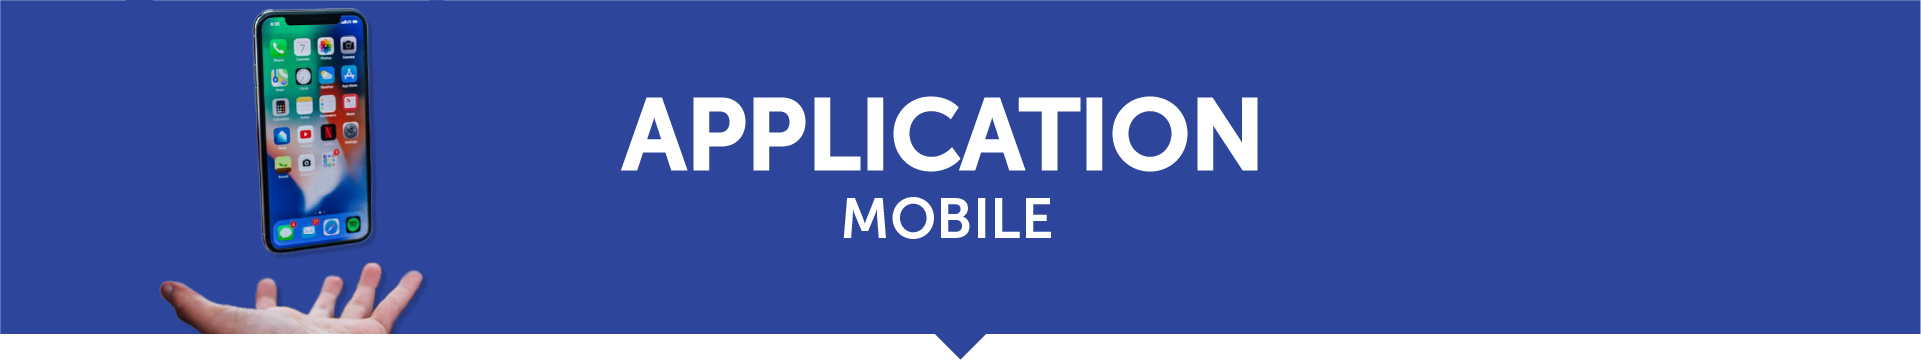 Application mobile